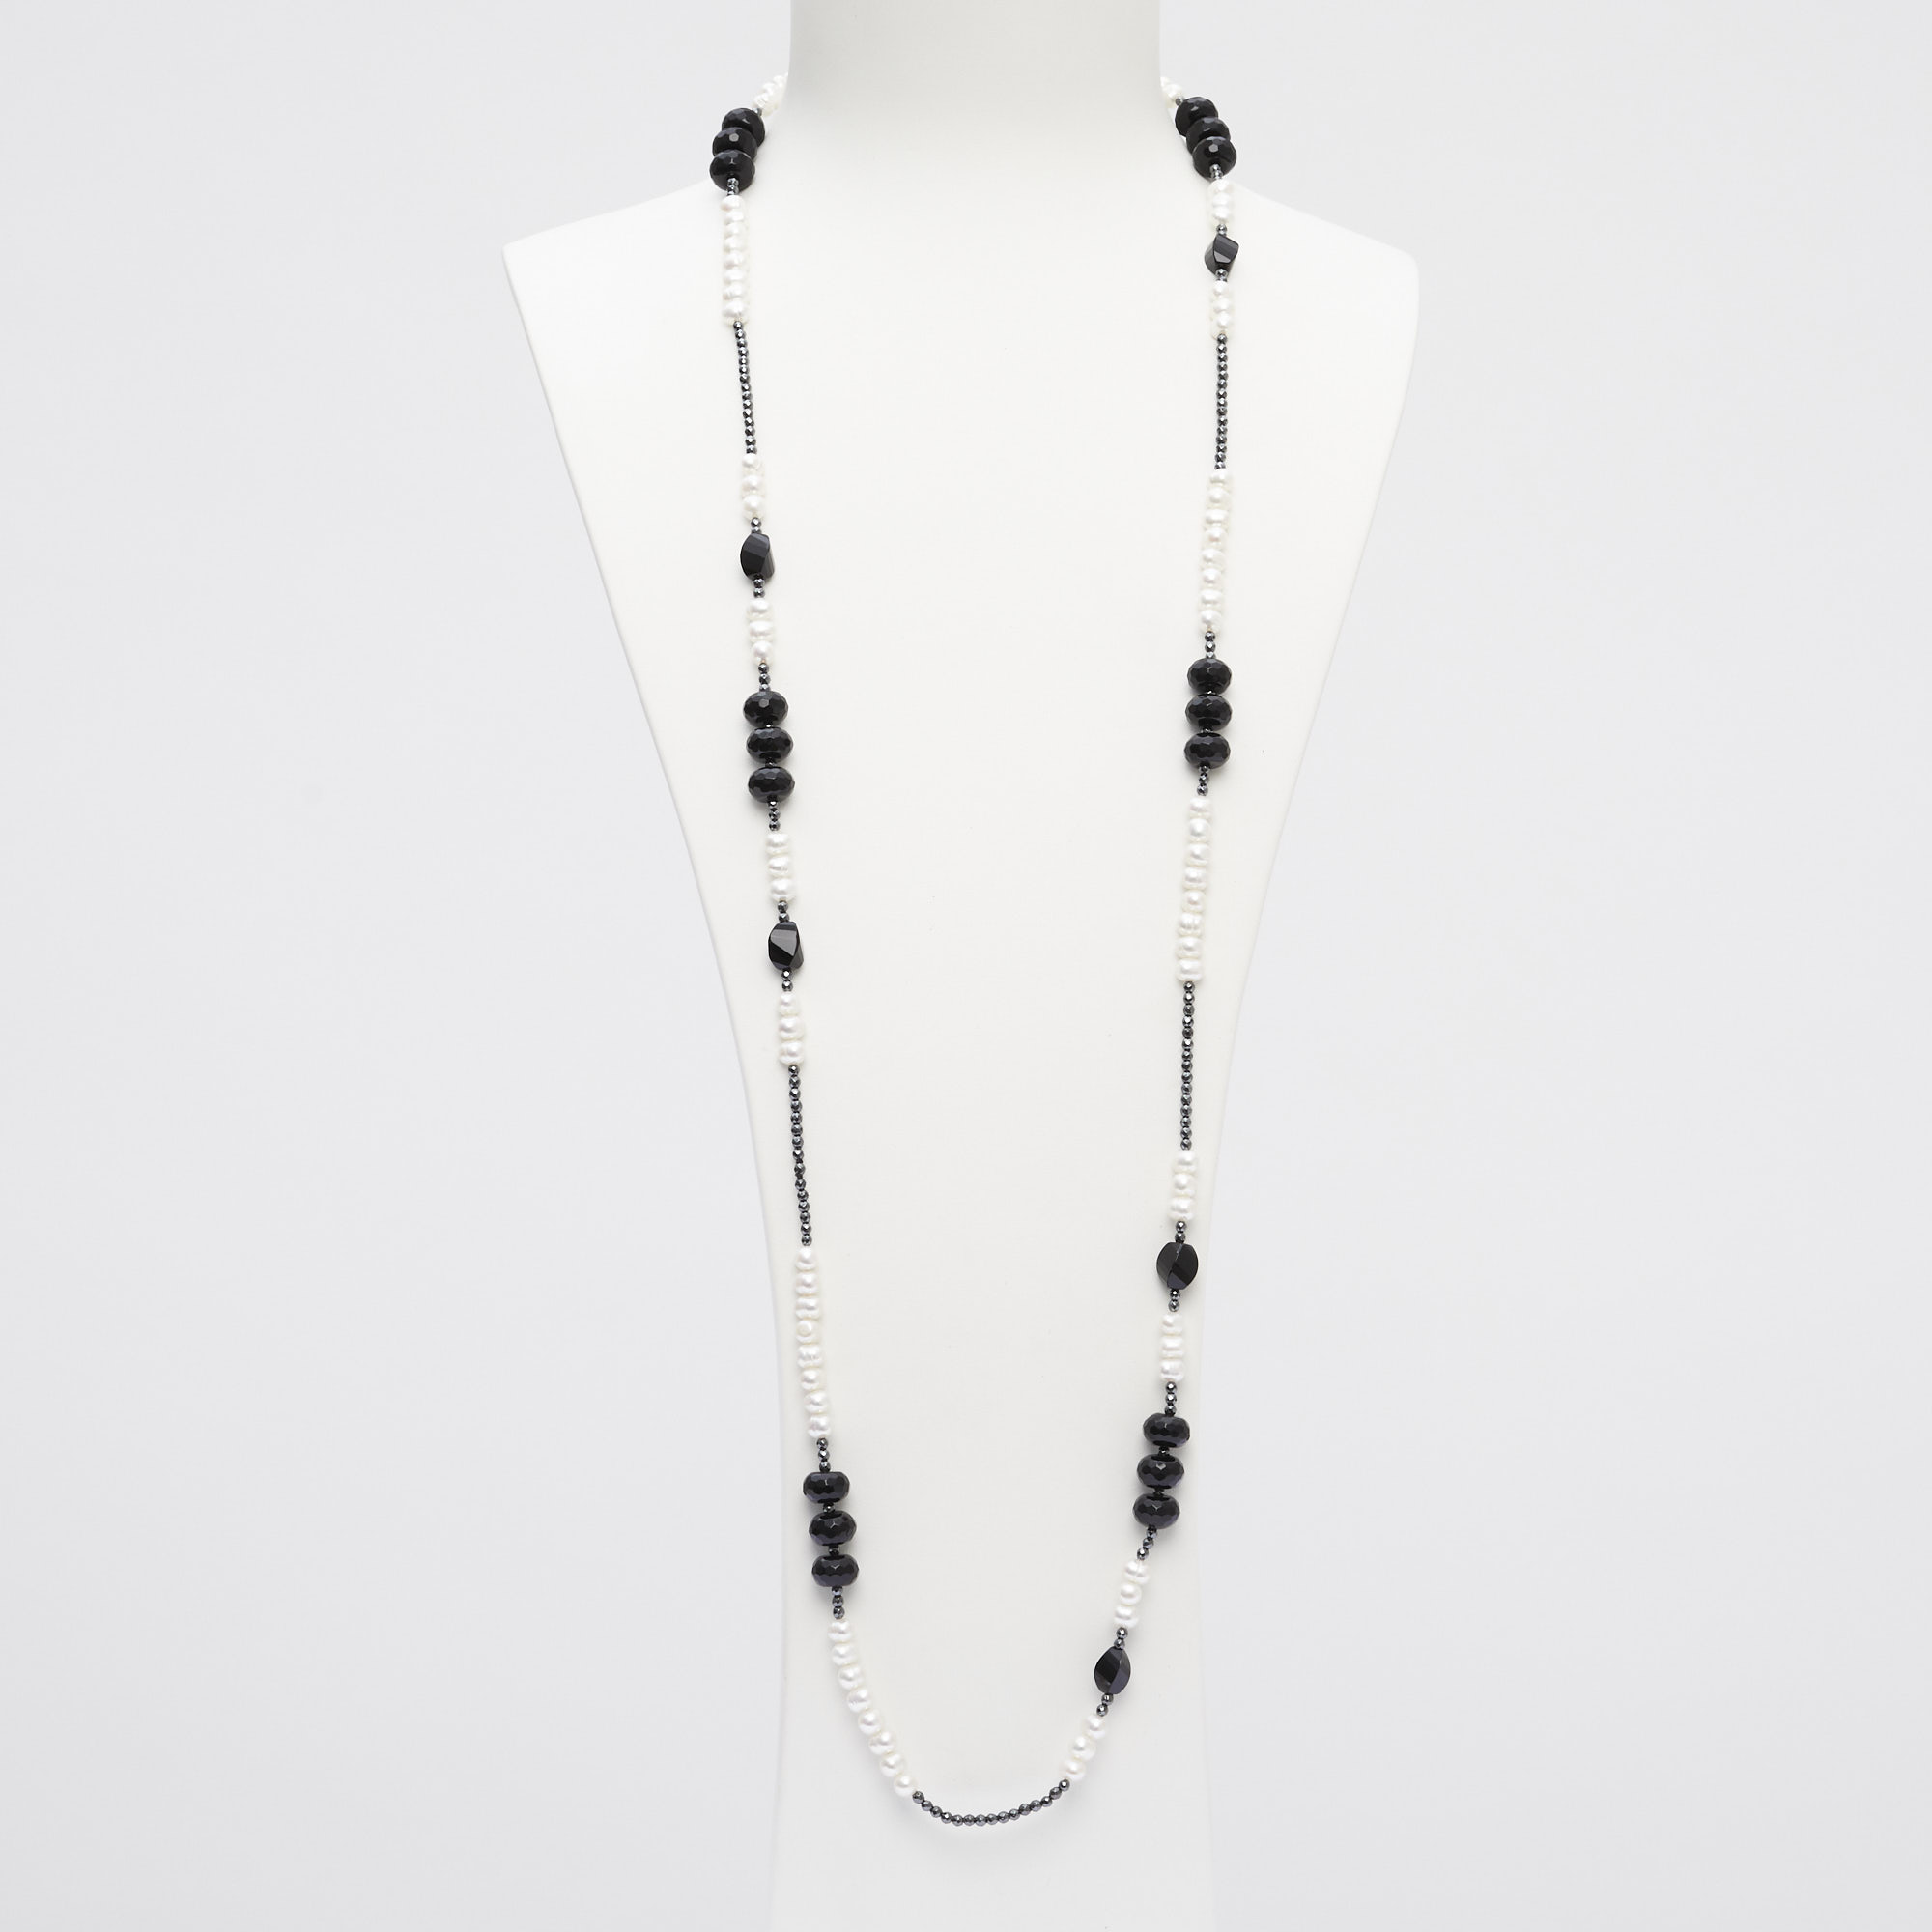 Collana Lunga in agata nera, perle ed ematite naturale